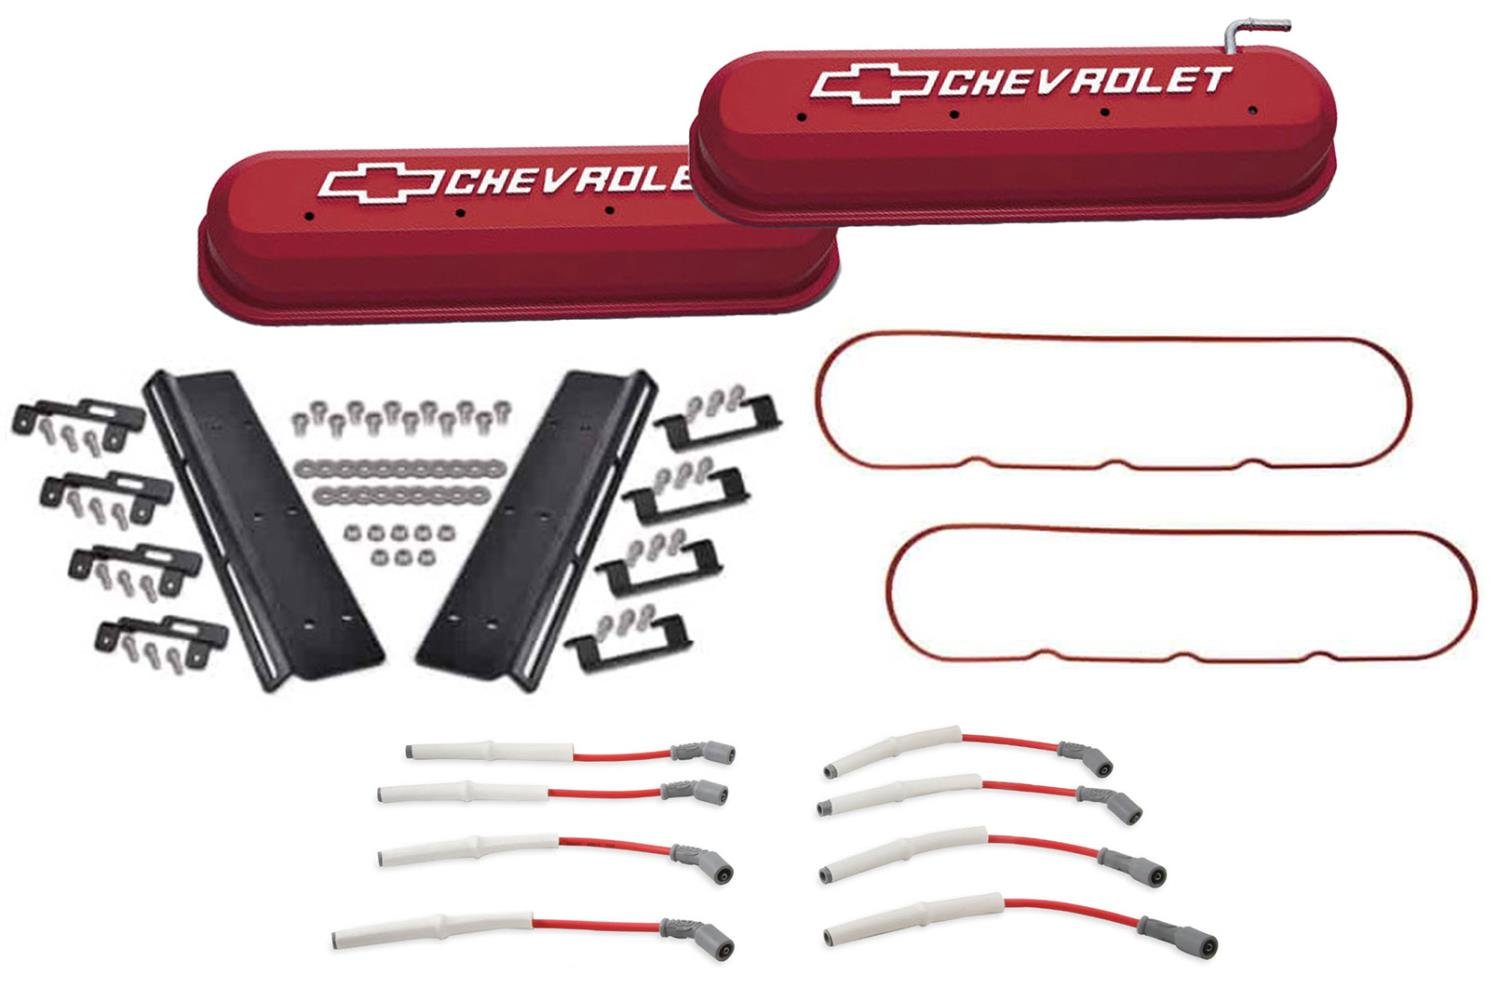 141-267 Die-Cast Slant-Edge Valve Cover Kit for GM Gen III/IV LS Engines w/Raised Chevrolet Logo for LS1/LS6 Coils [Red]